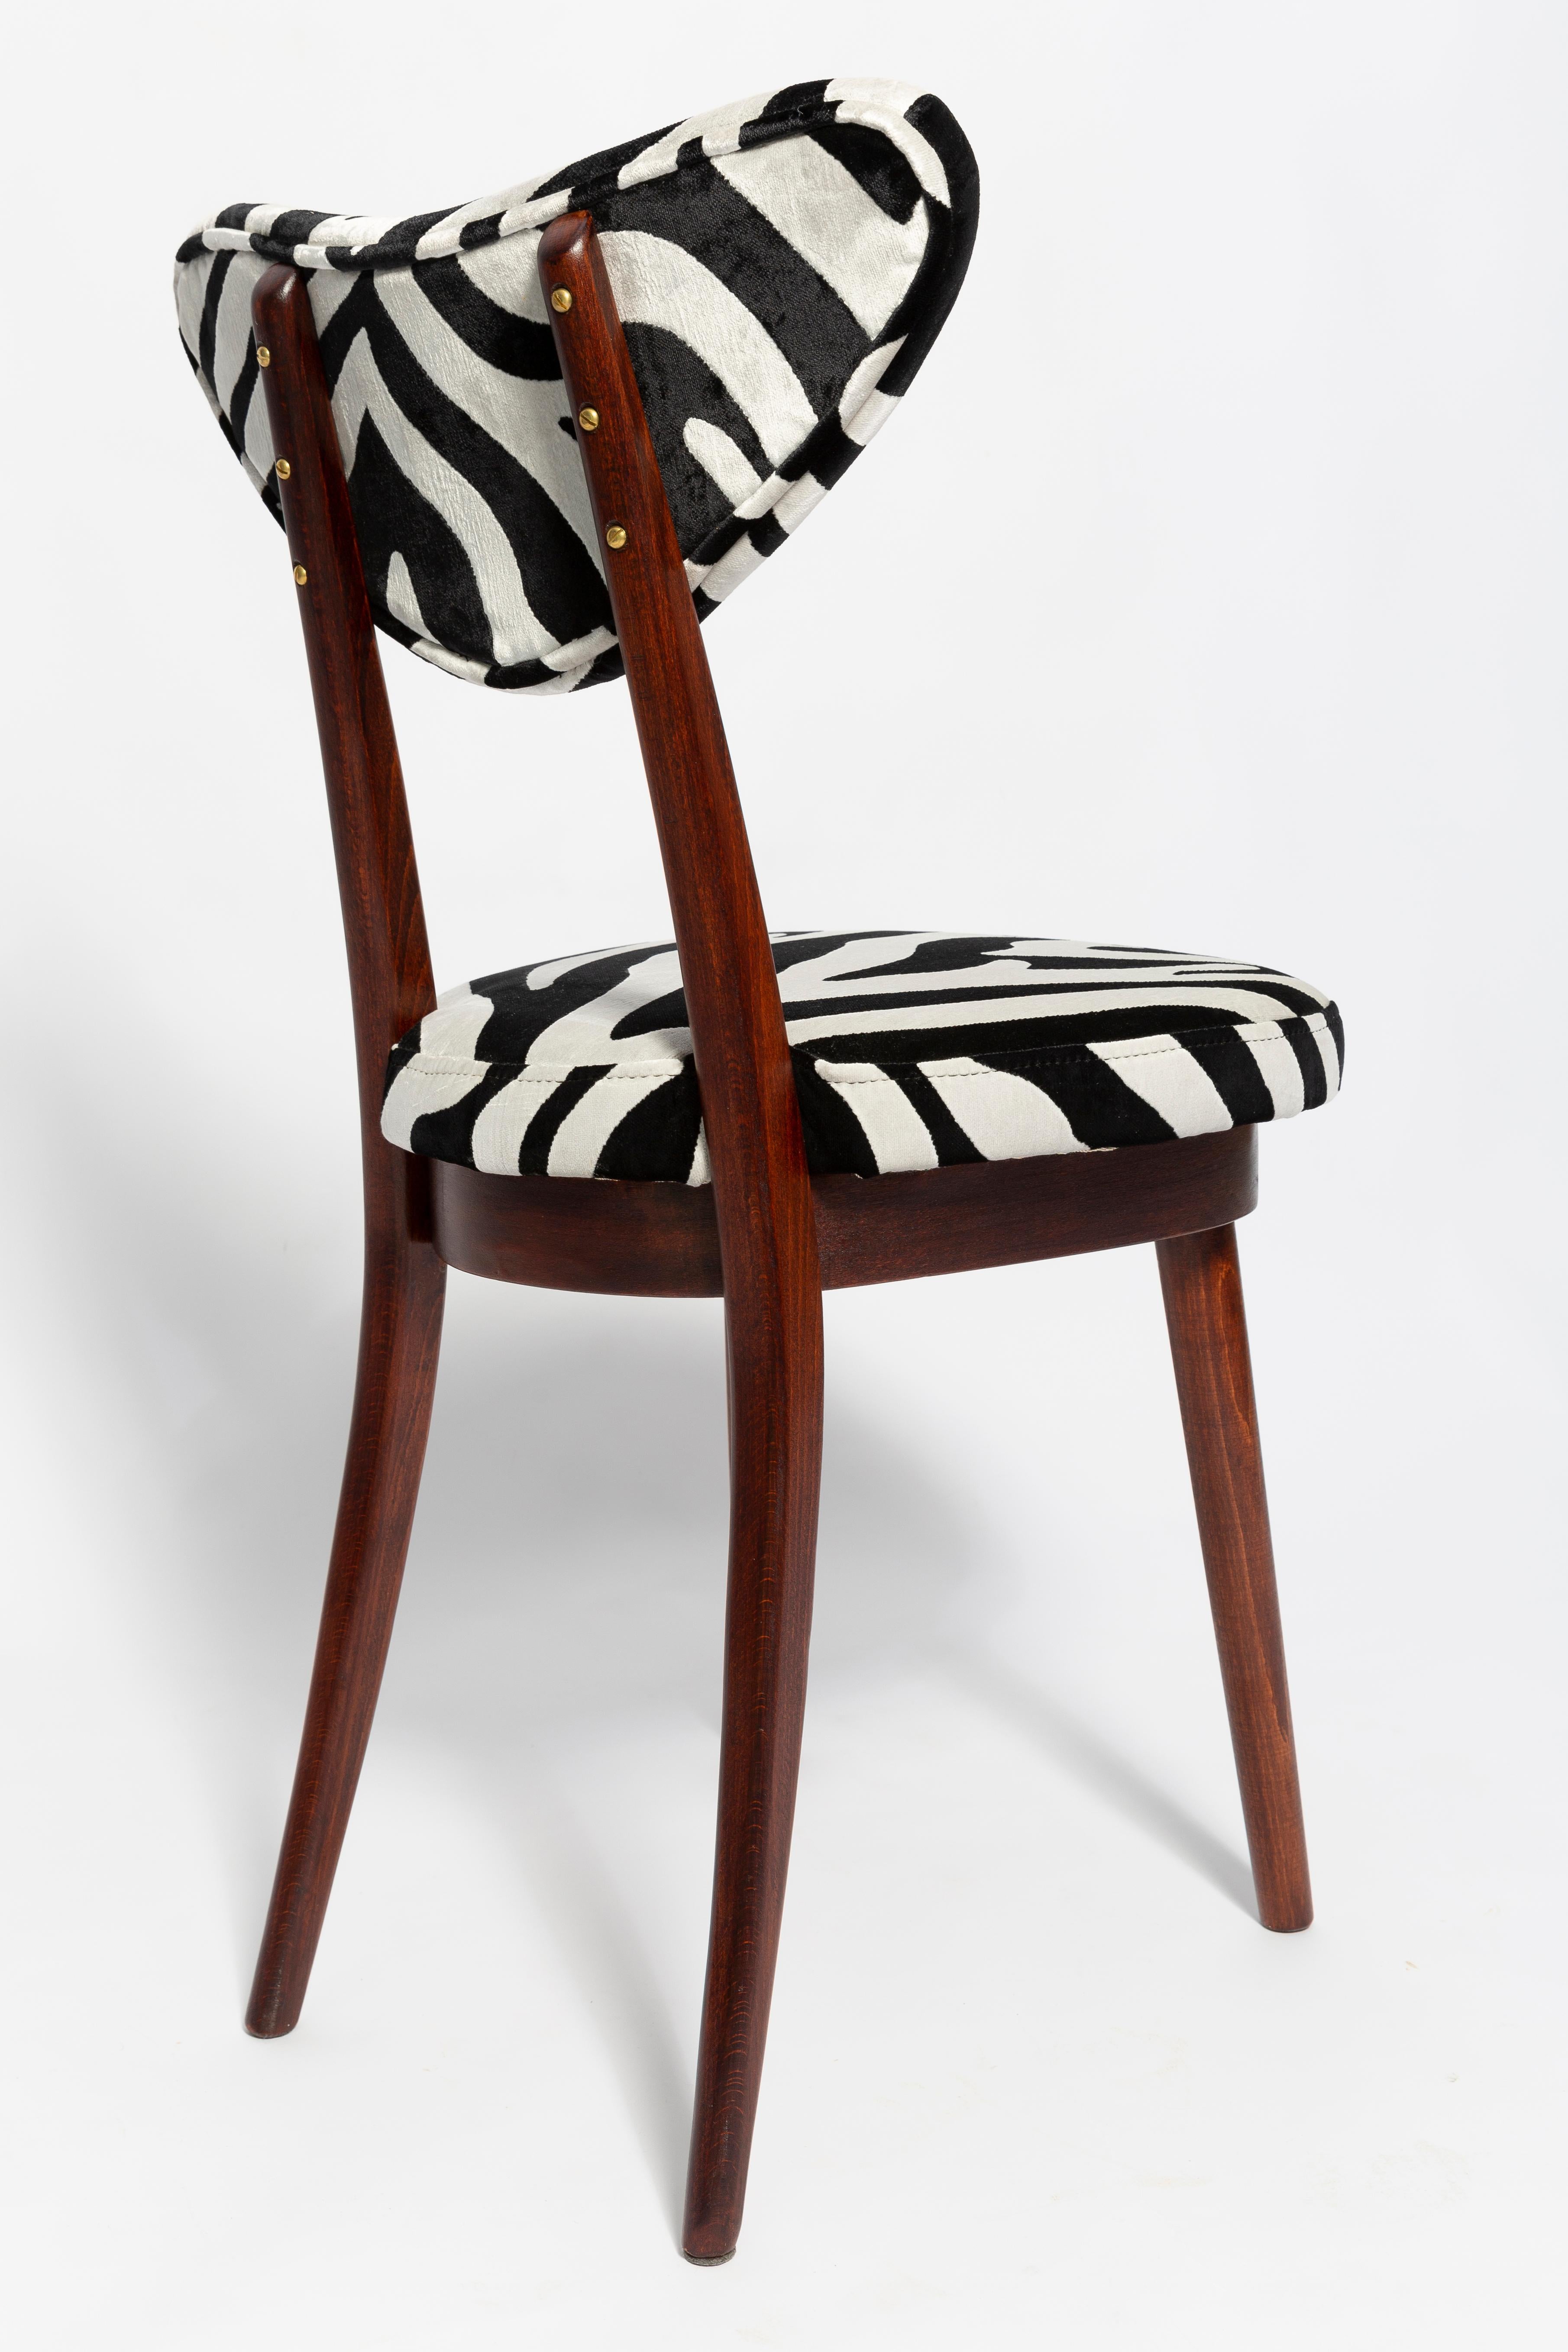 20th Century Midcentury Regency Zebra Black and White Heart Chair, Poland, 1960s For Sale